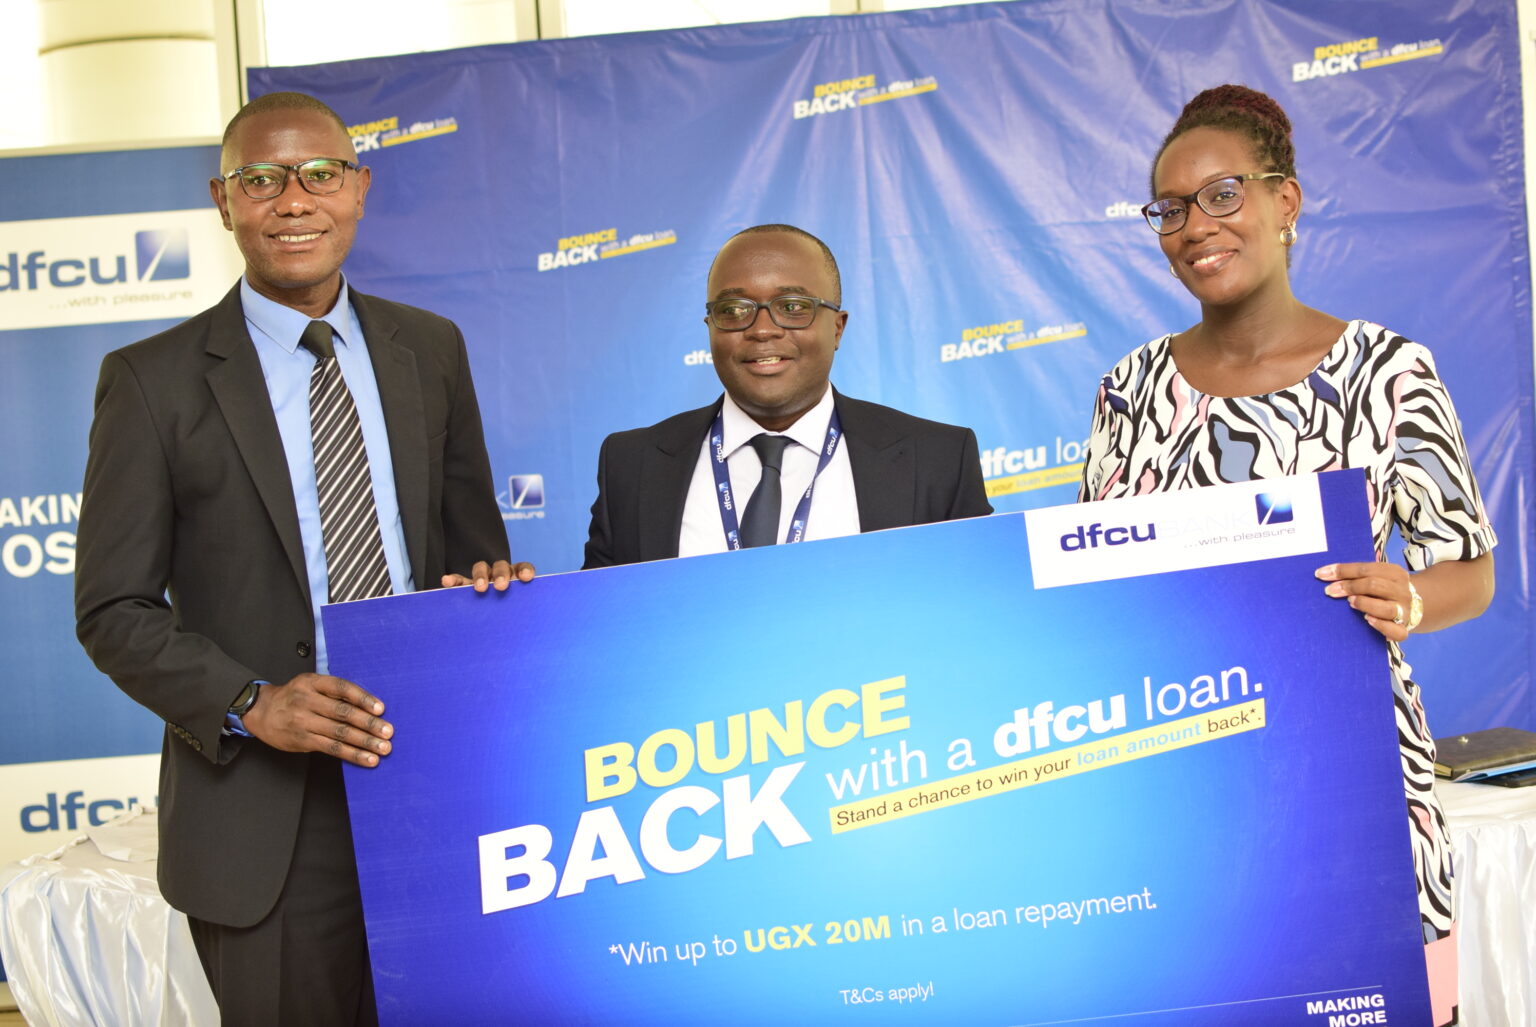 DFCU launches ‘Bounce Back’ loan campaign